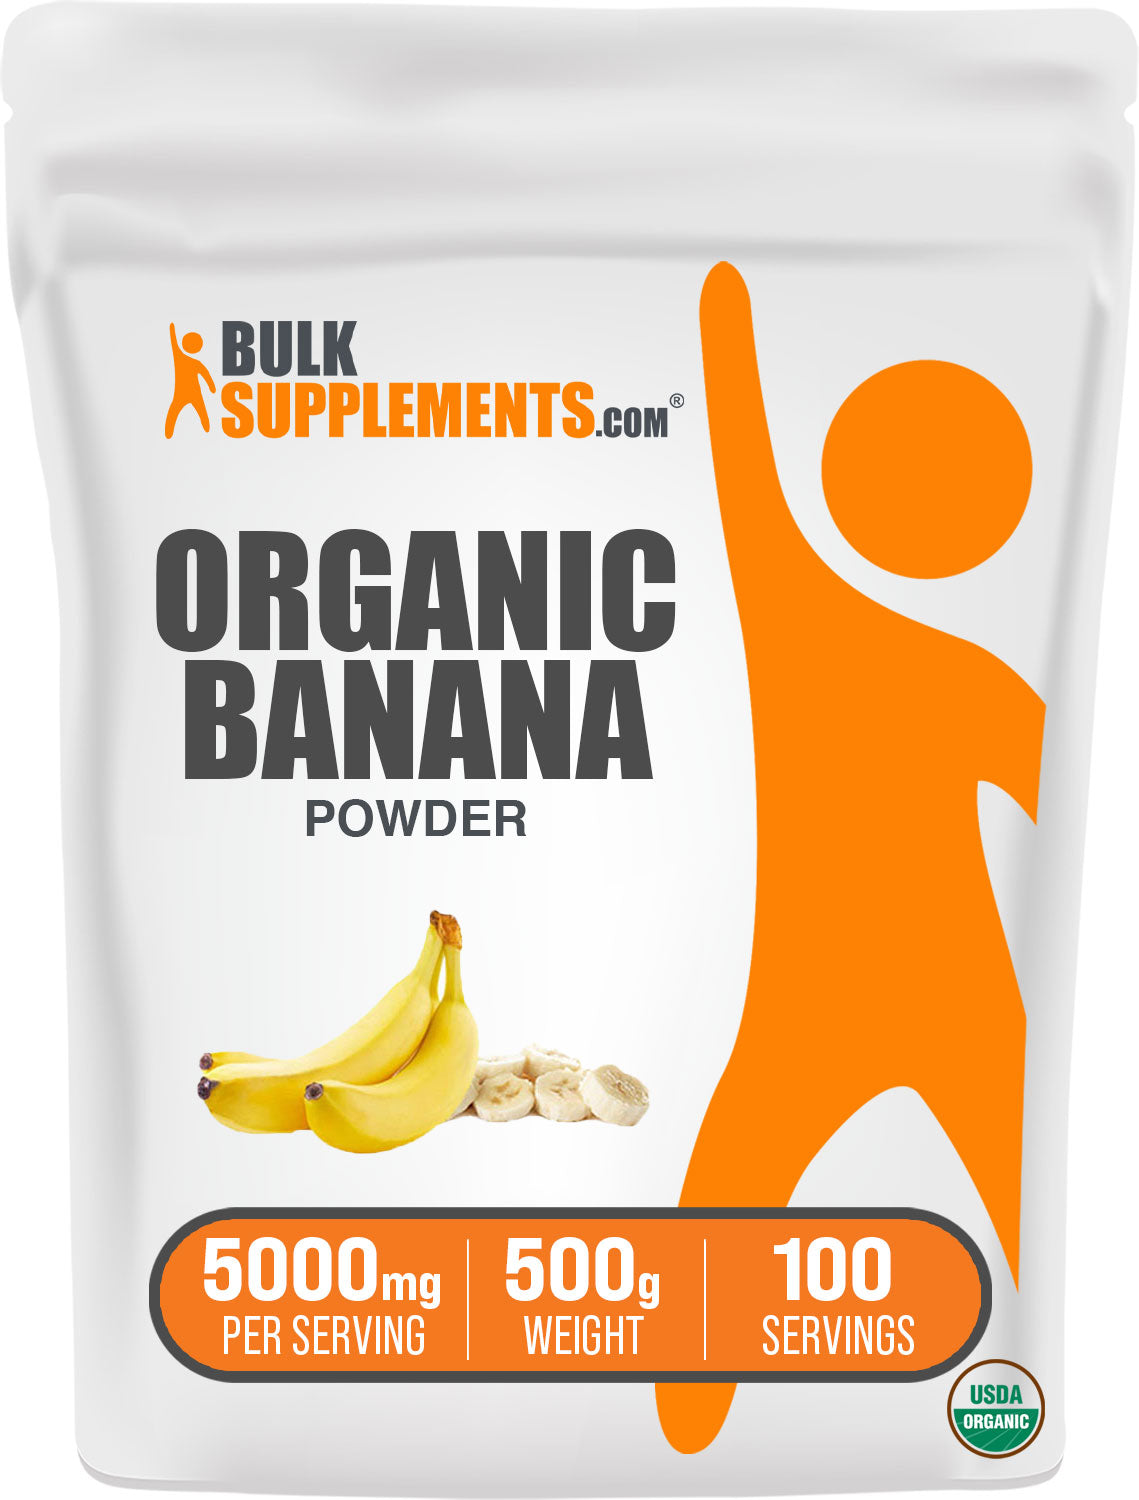 BulkSupplements.com Organic Banana Powder 500g bag image